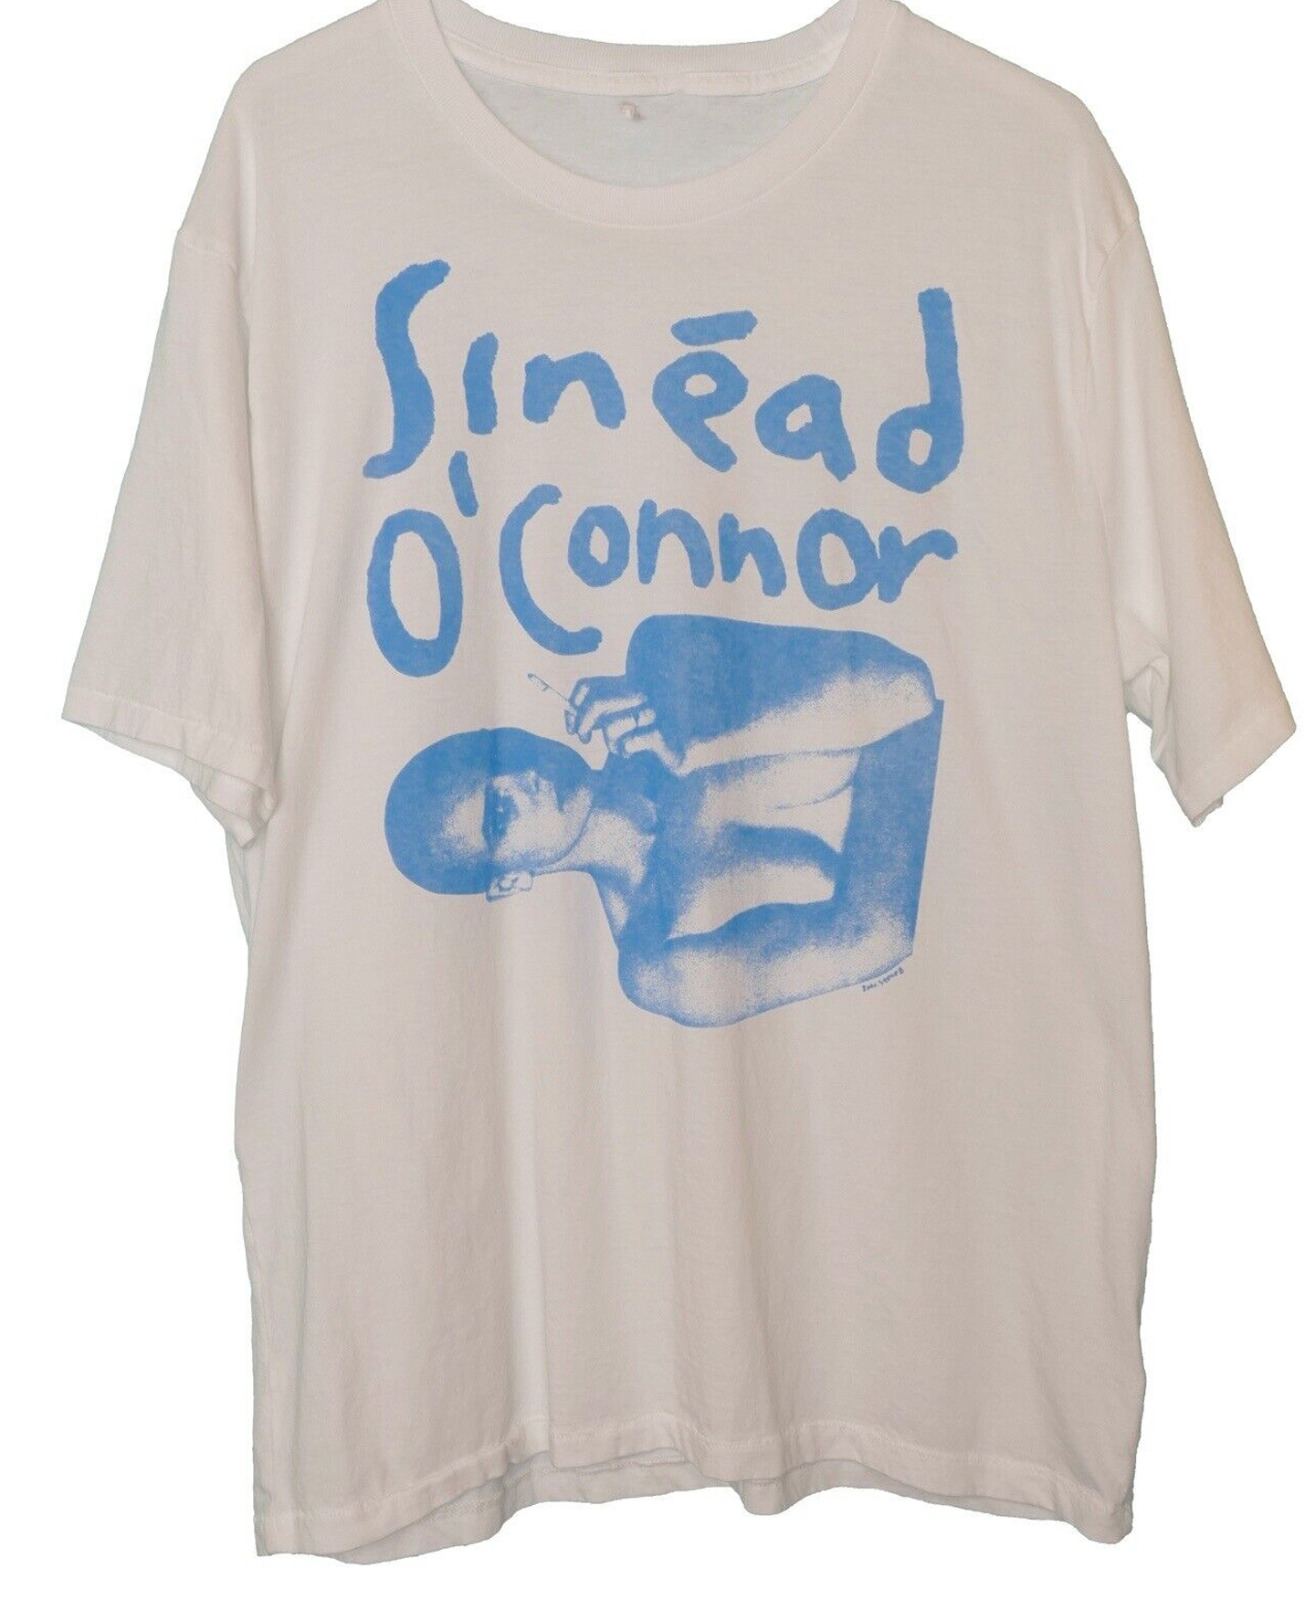 VTG Sinead O Connor smoking WHITE T-shirt Short sleeve All sizes S-5Xl XX16